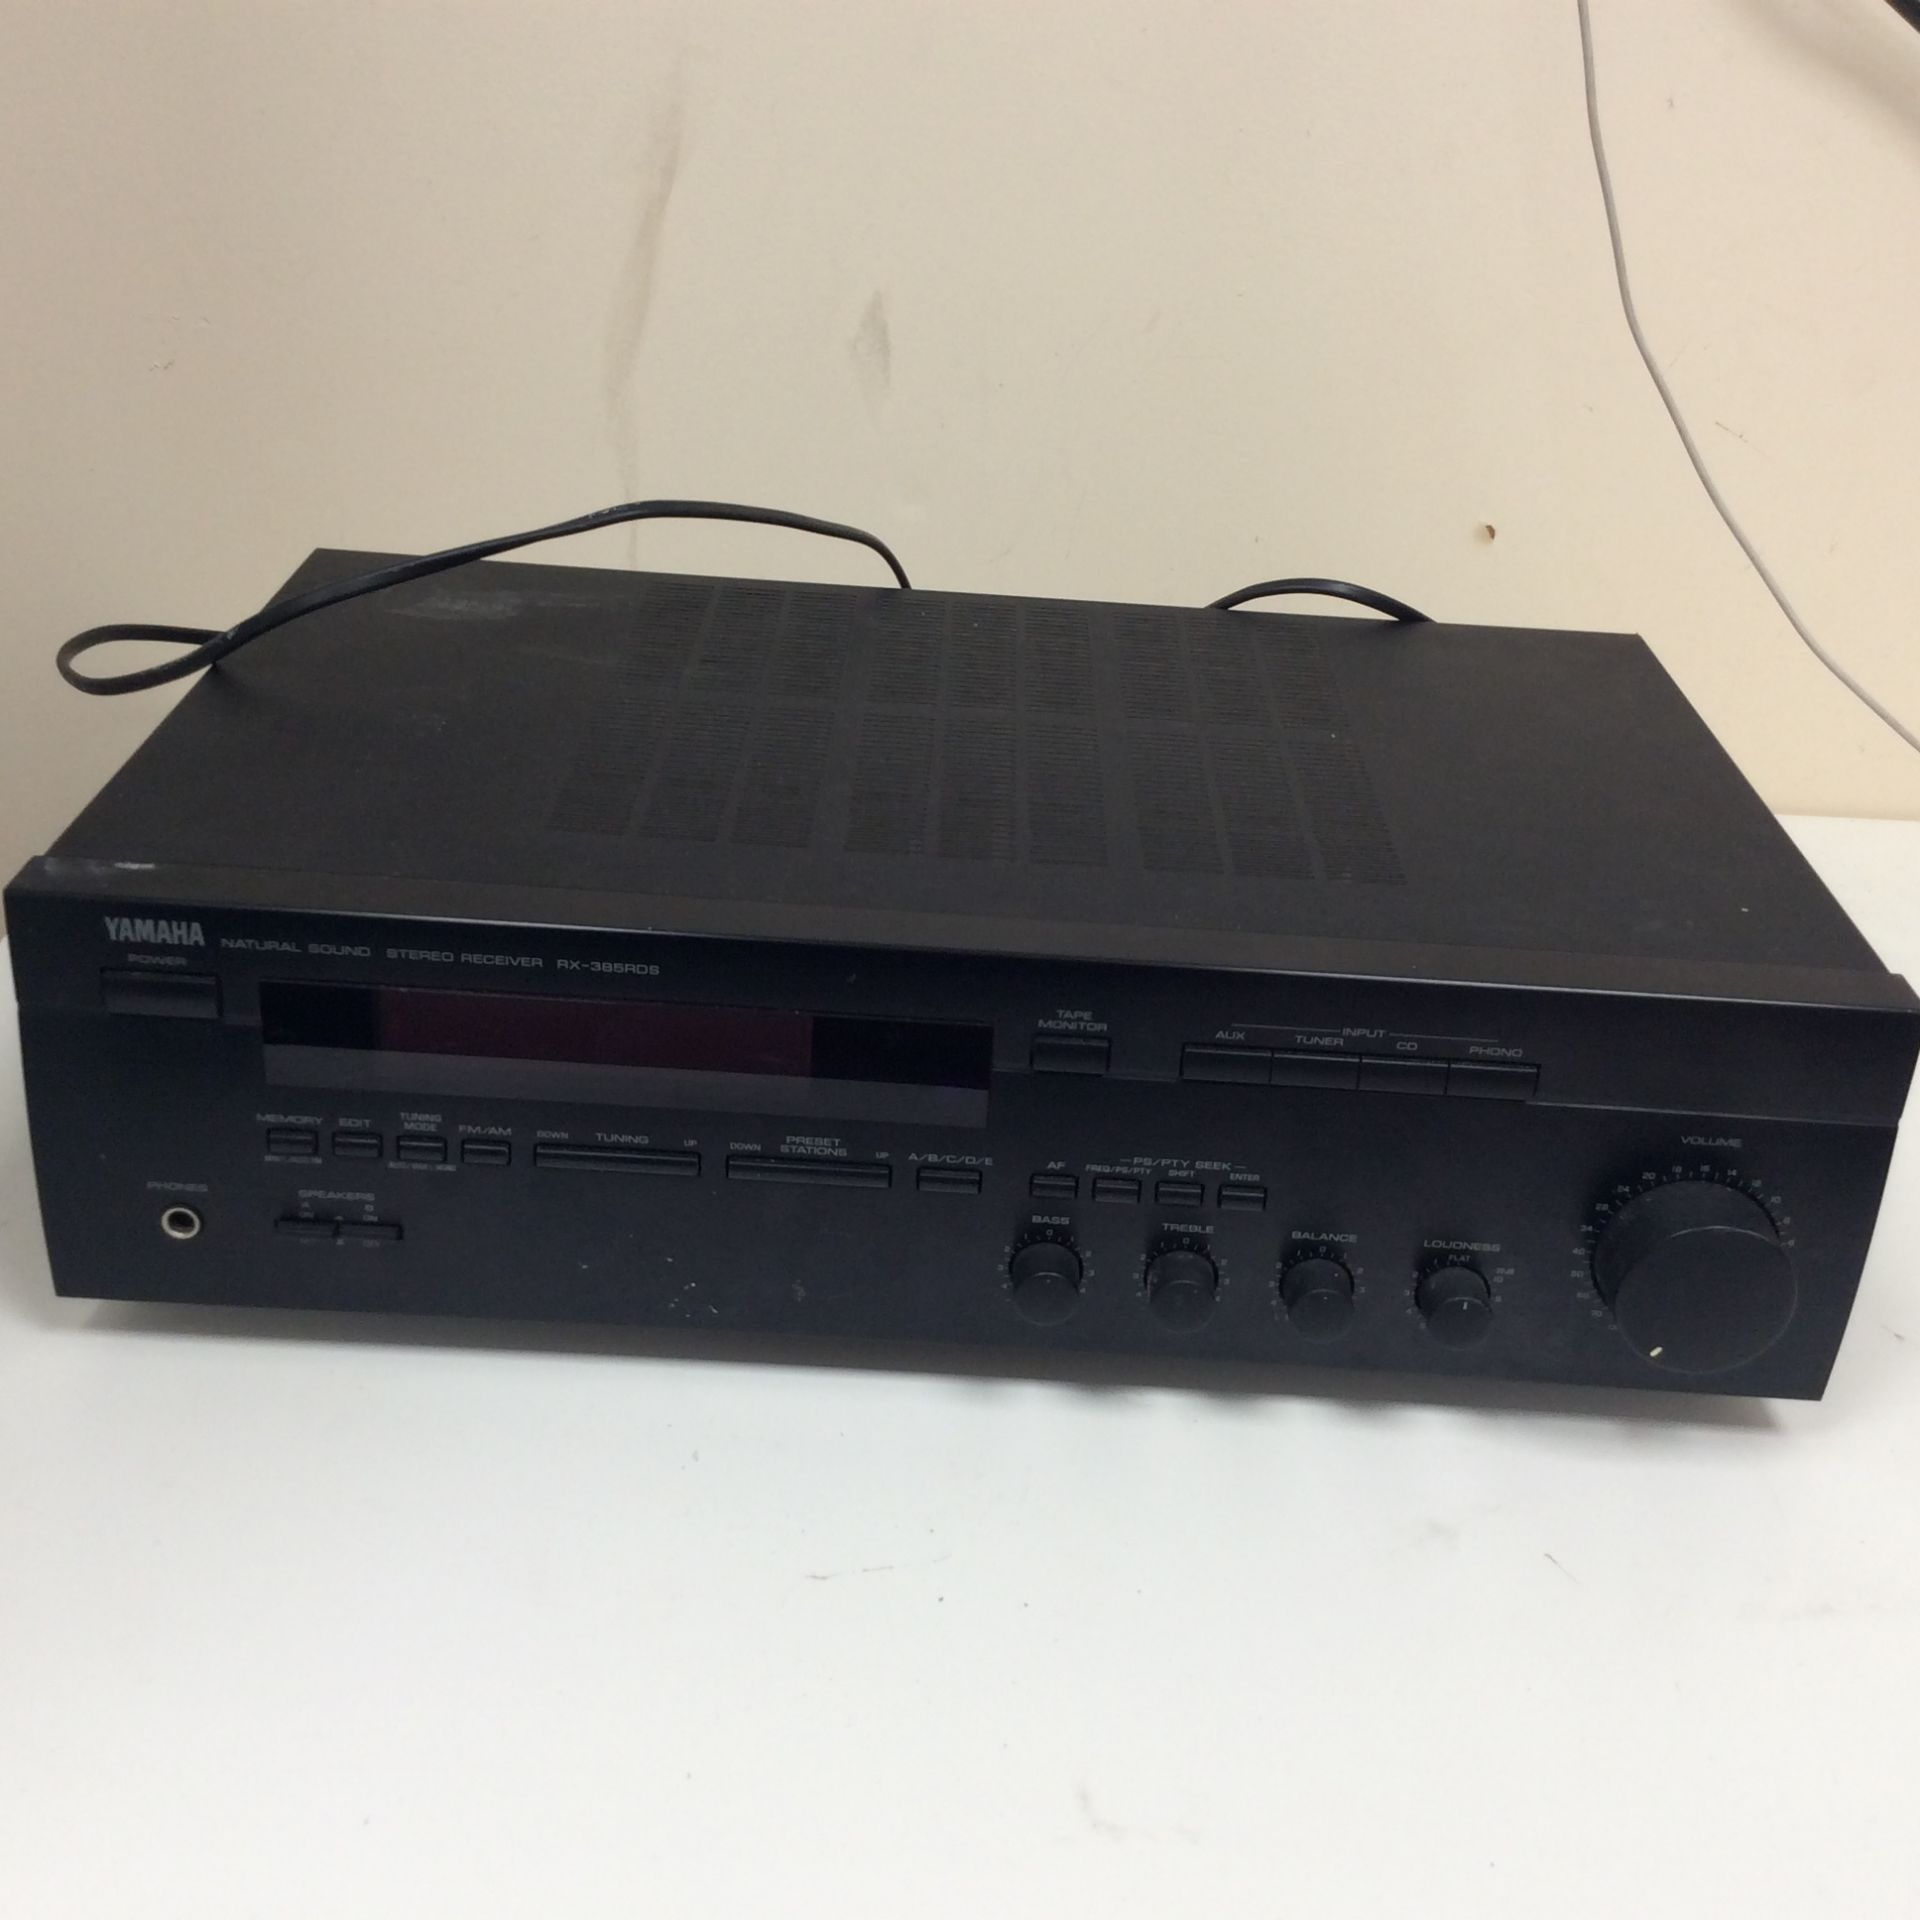 Yamaha natural sound stereo reciver - model rx-385rds